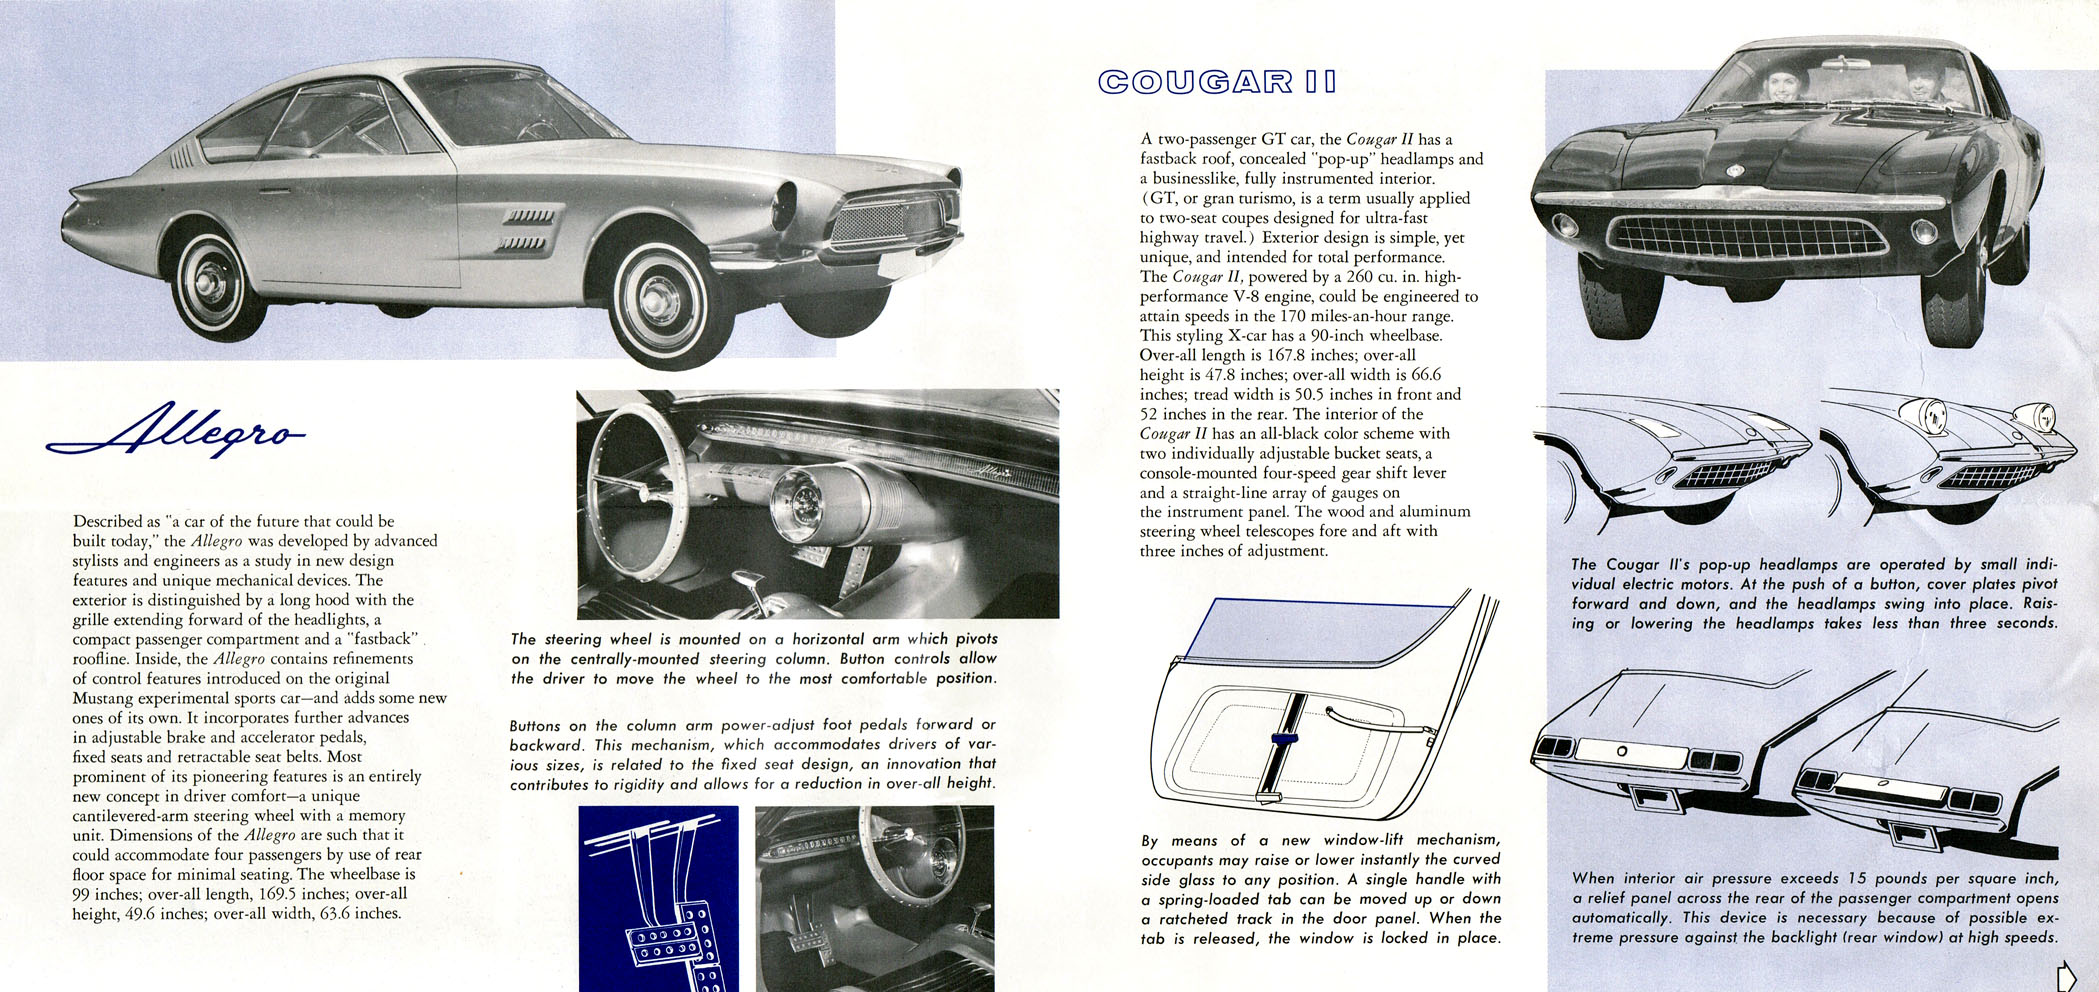 1964 FMC Styling X-Cars-03